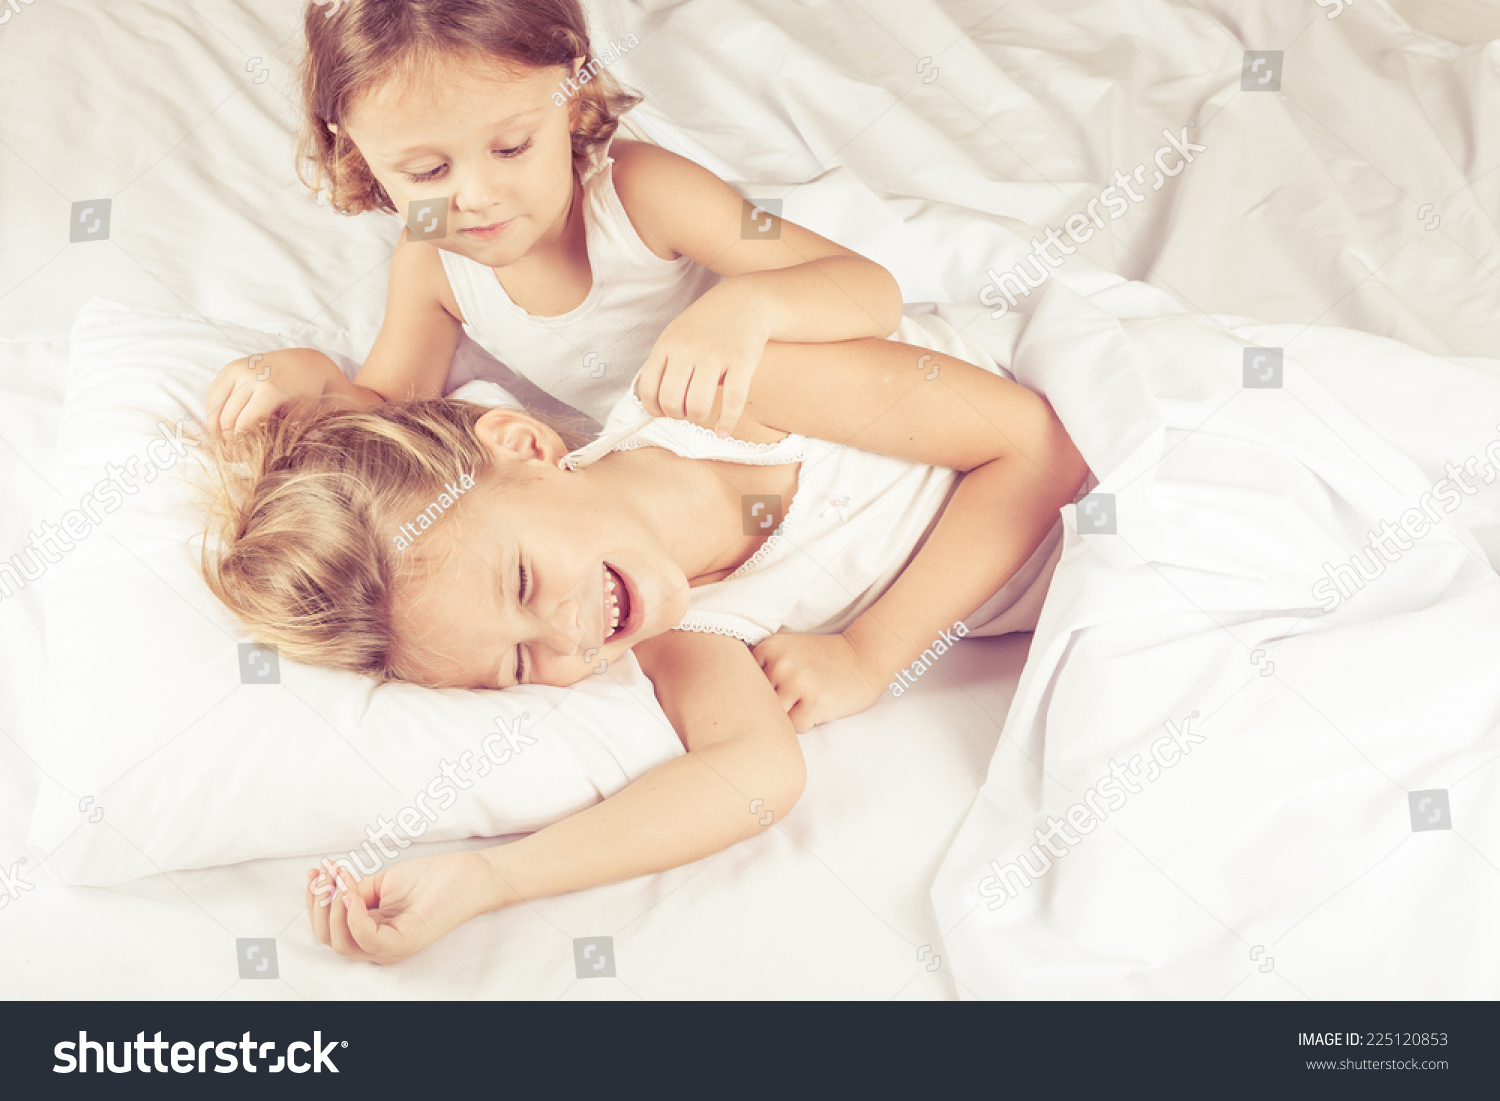 Братик и сестричка в кровати